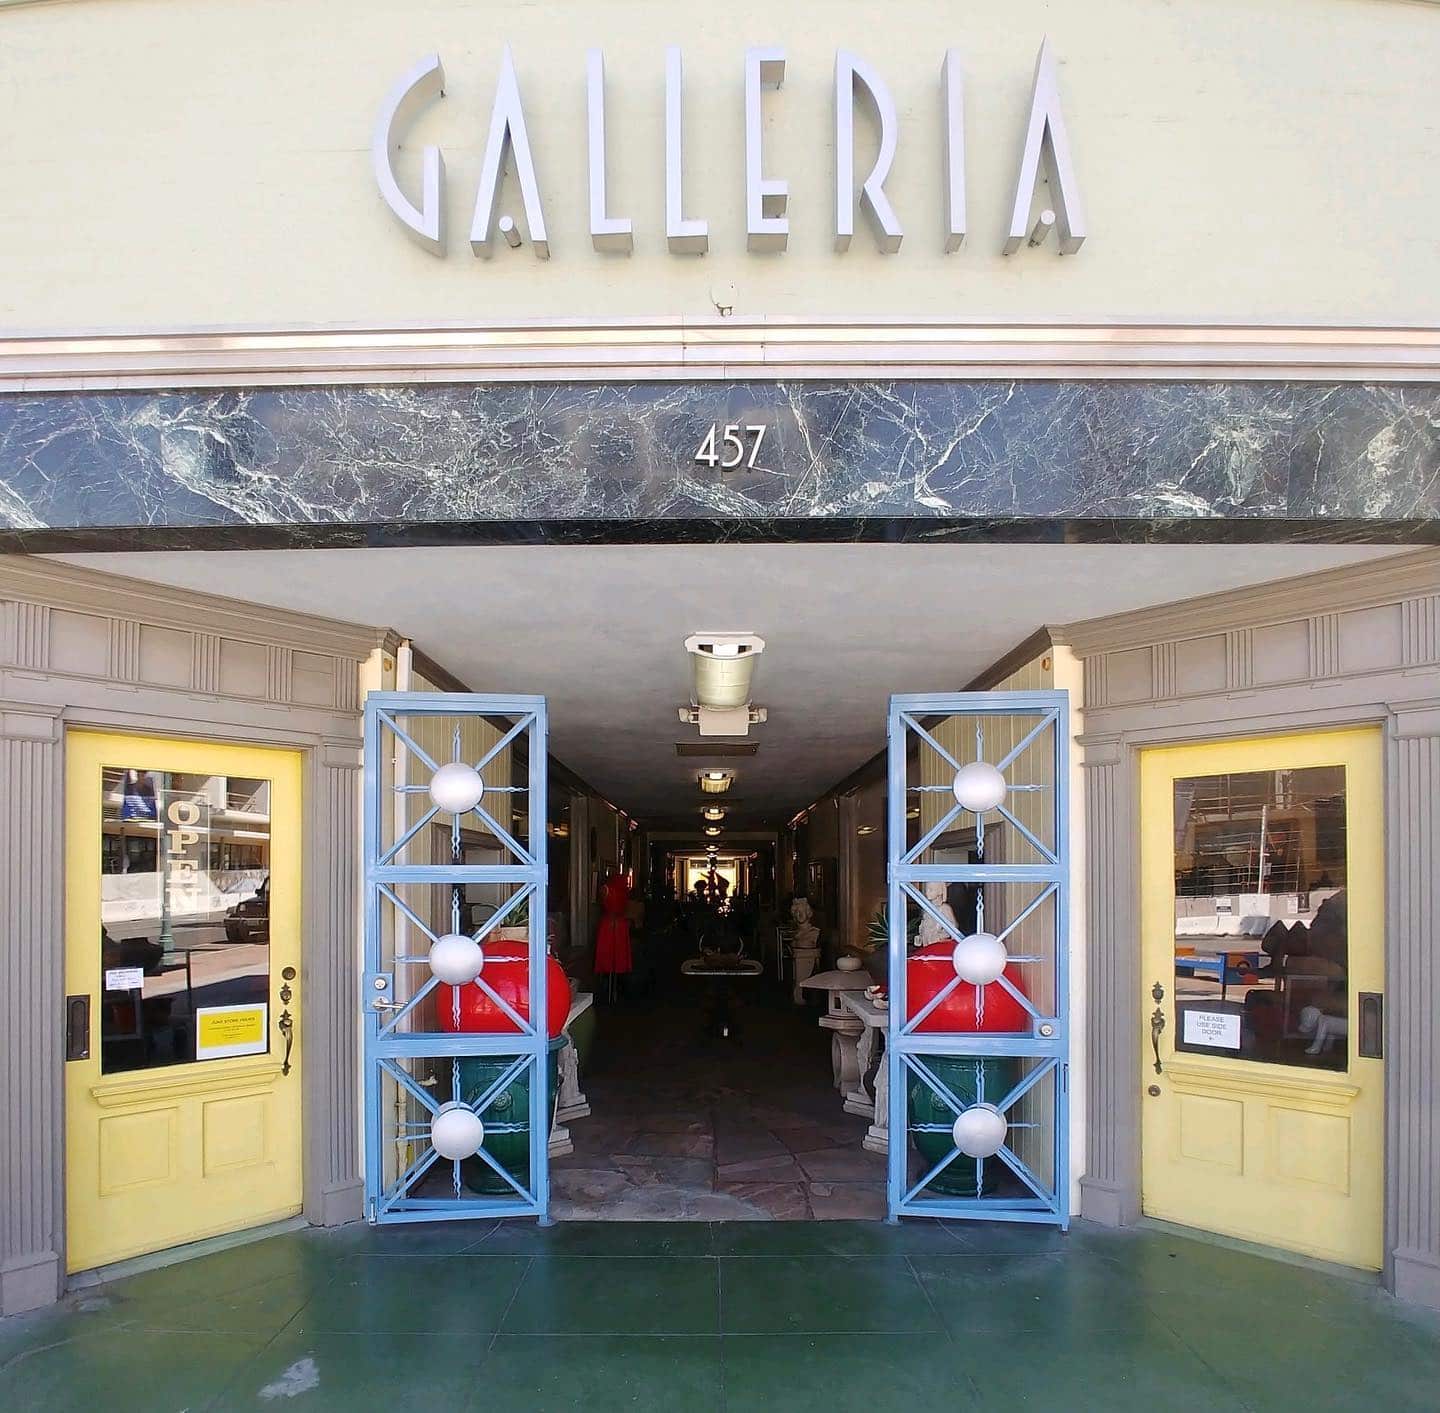 Palm Canyon Galleria